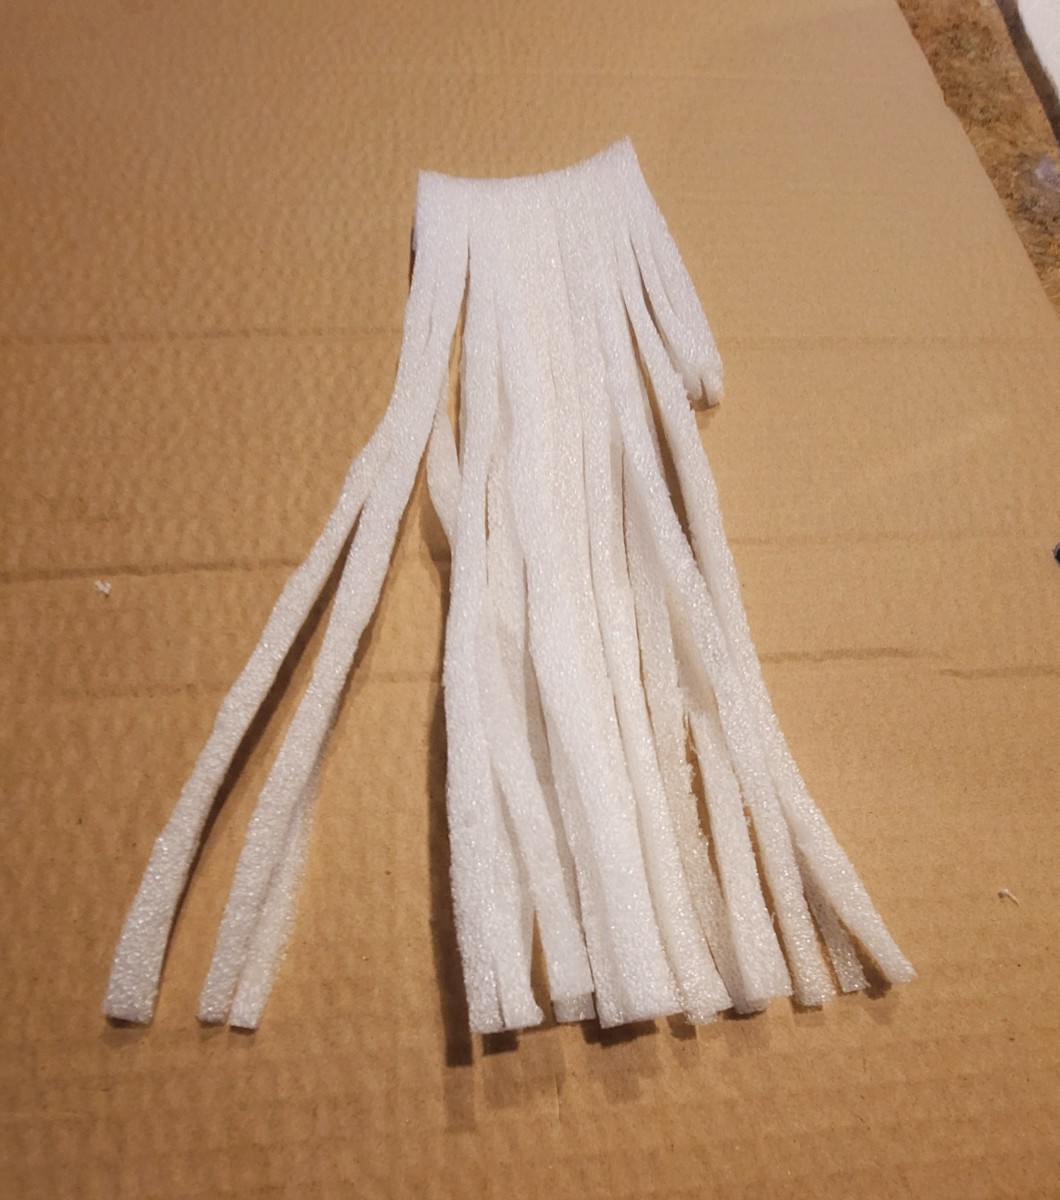 Your Styrofoam bristles should look something like this.